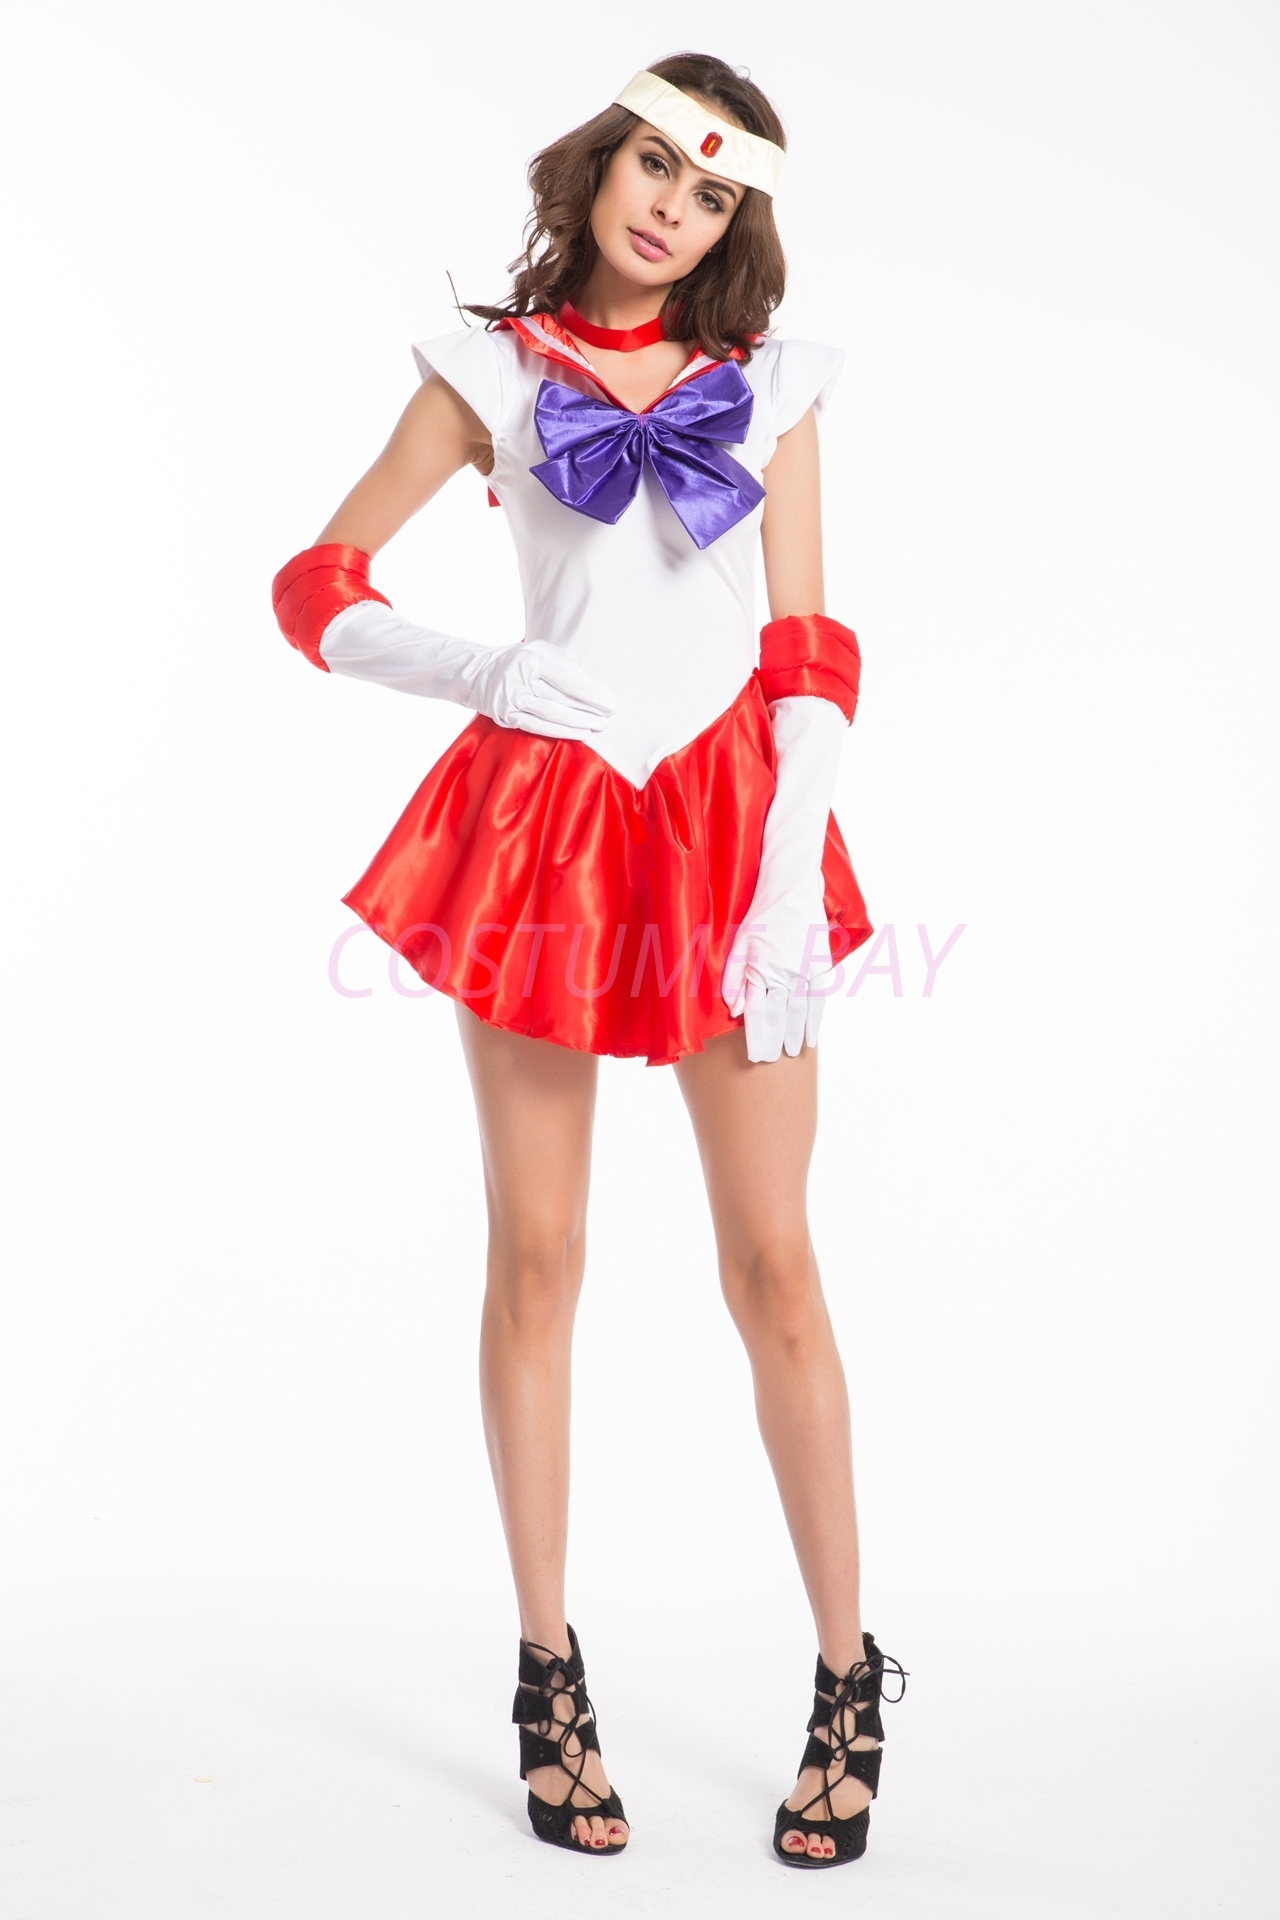 Sailor Moon Costume Cosplay Uniform Fancy Dress Up Sailormoon Outfit & Glove